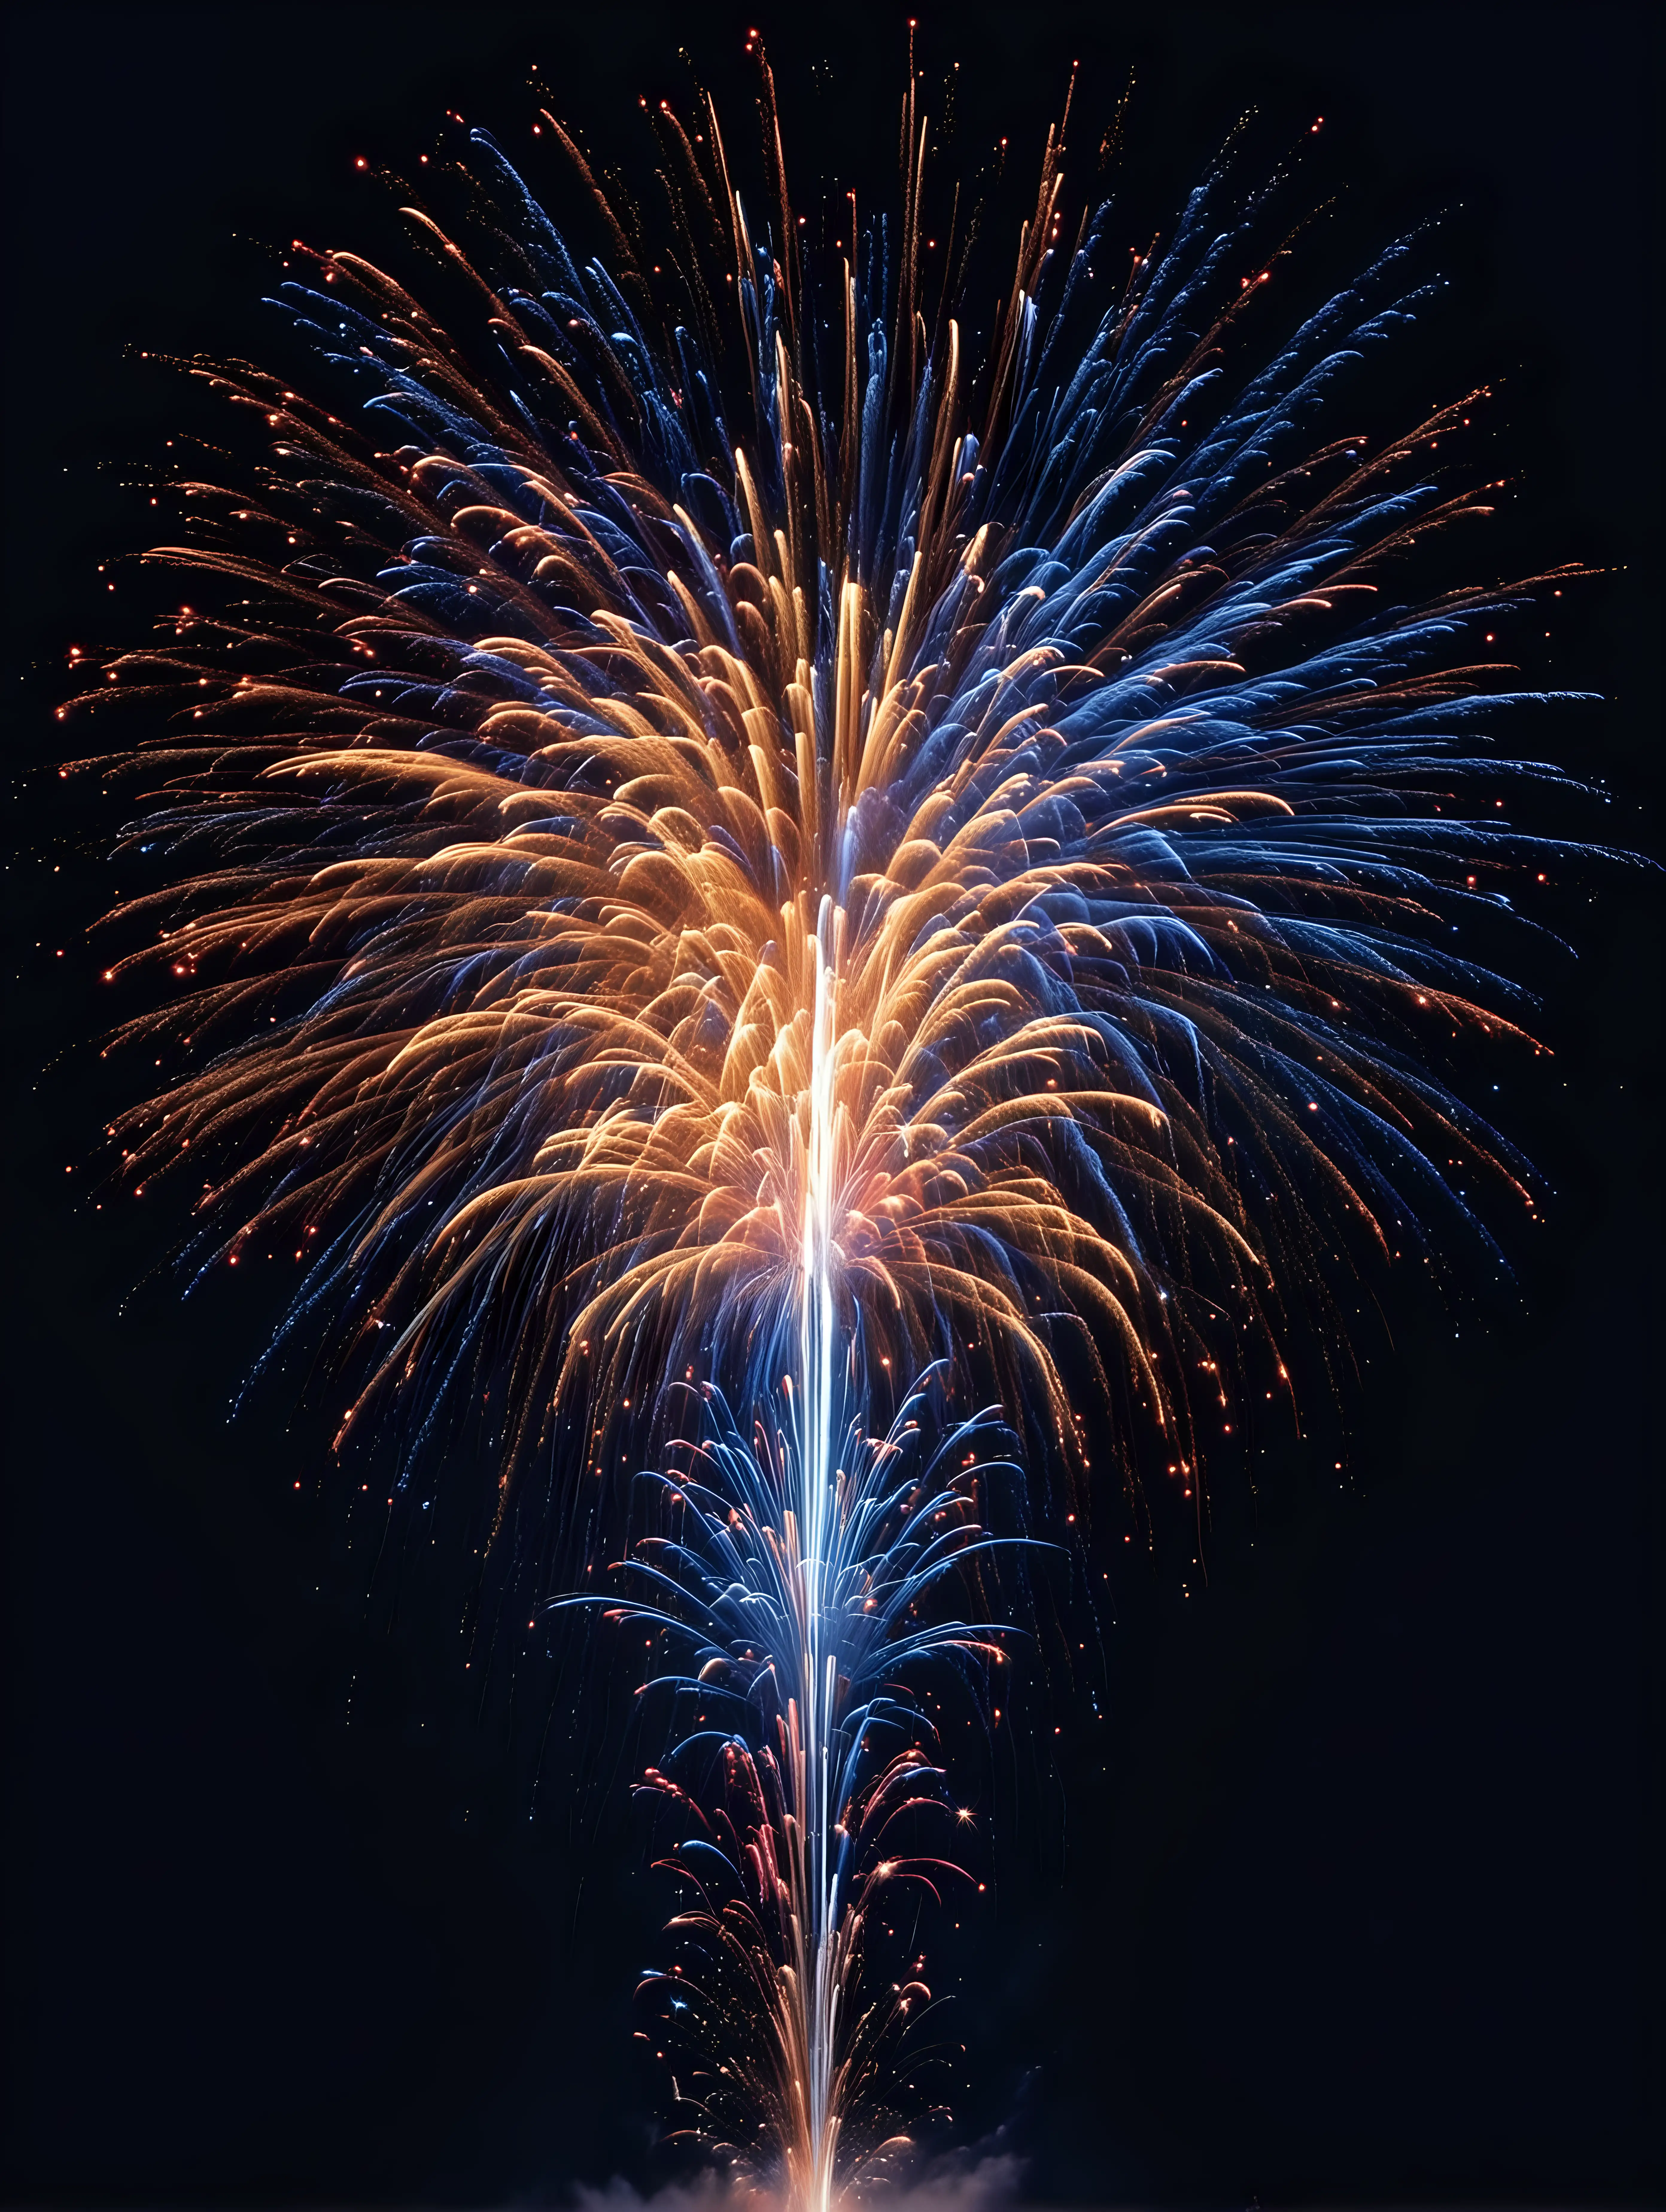 Vibrant MultiColored Fireworks Display Against Dark Blue Sky